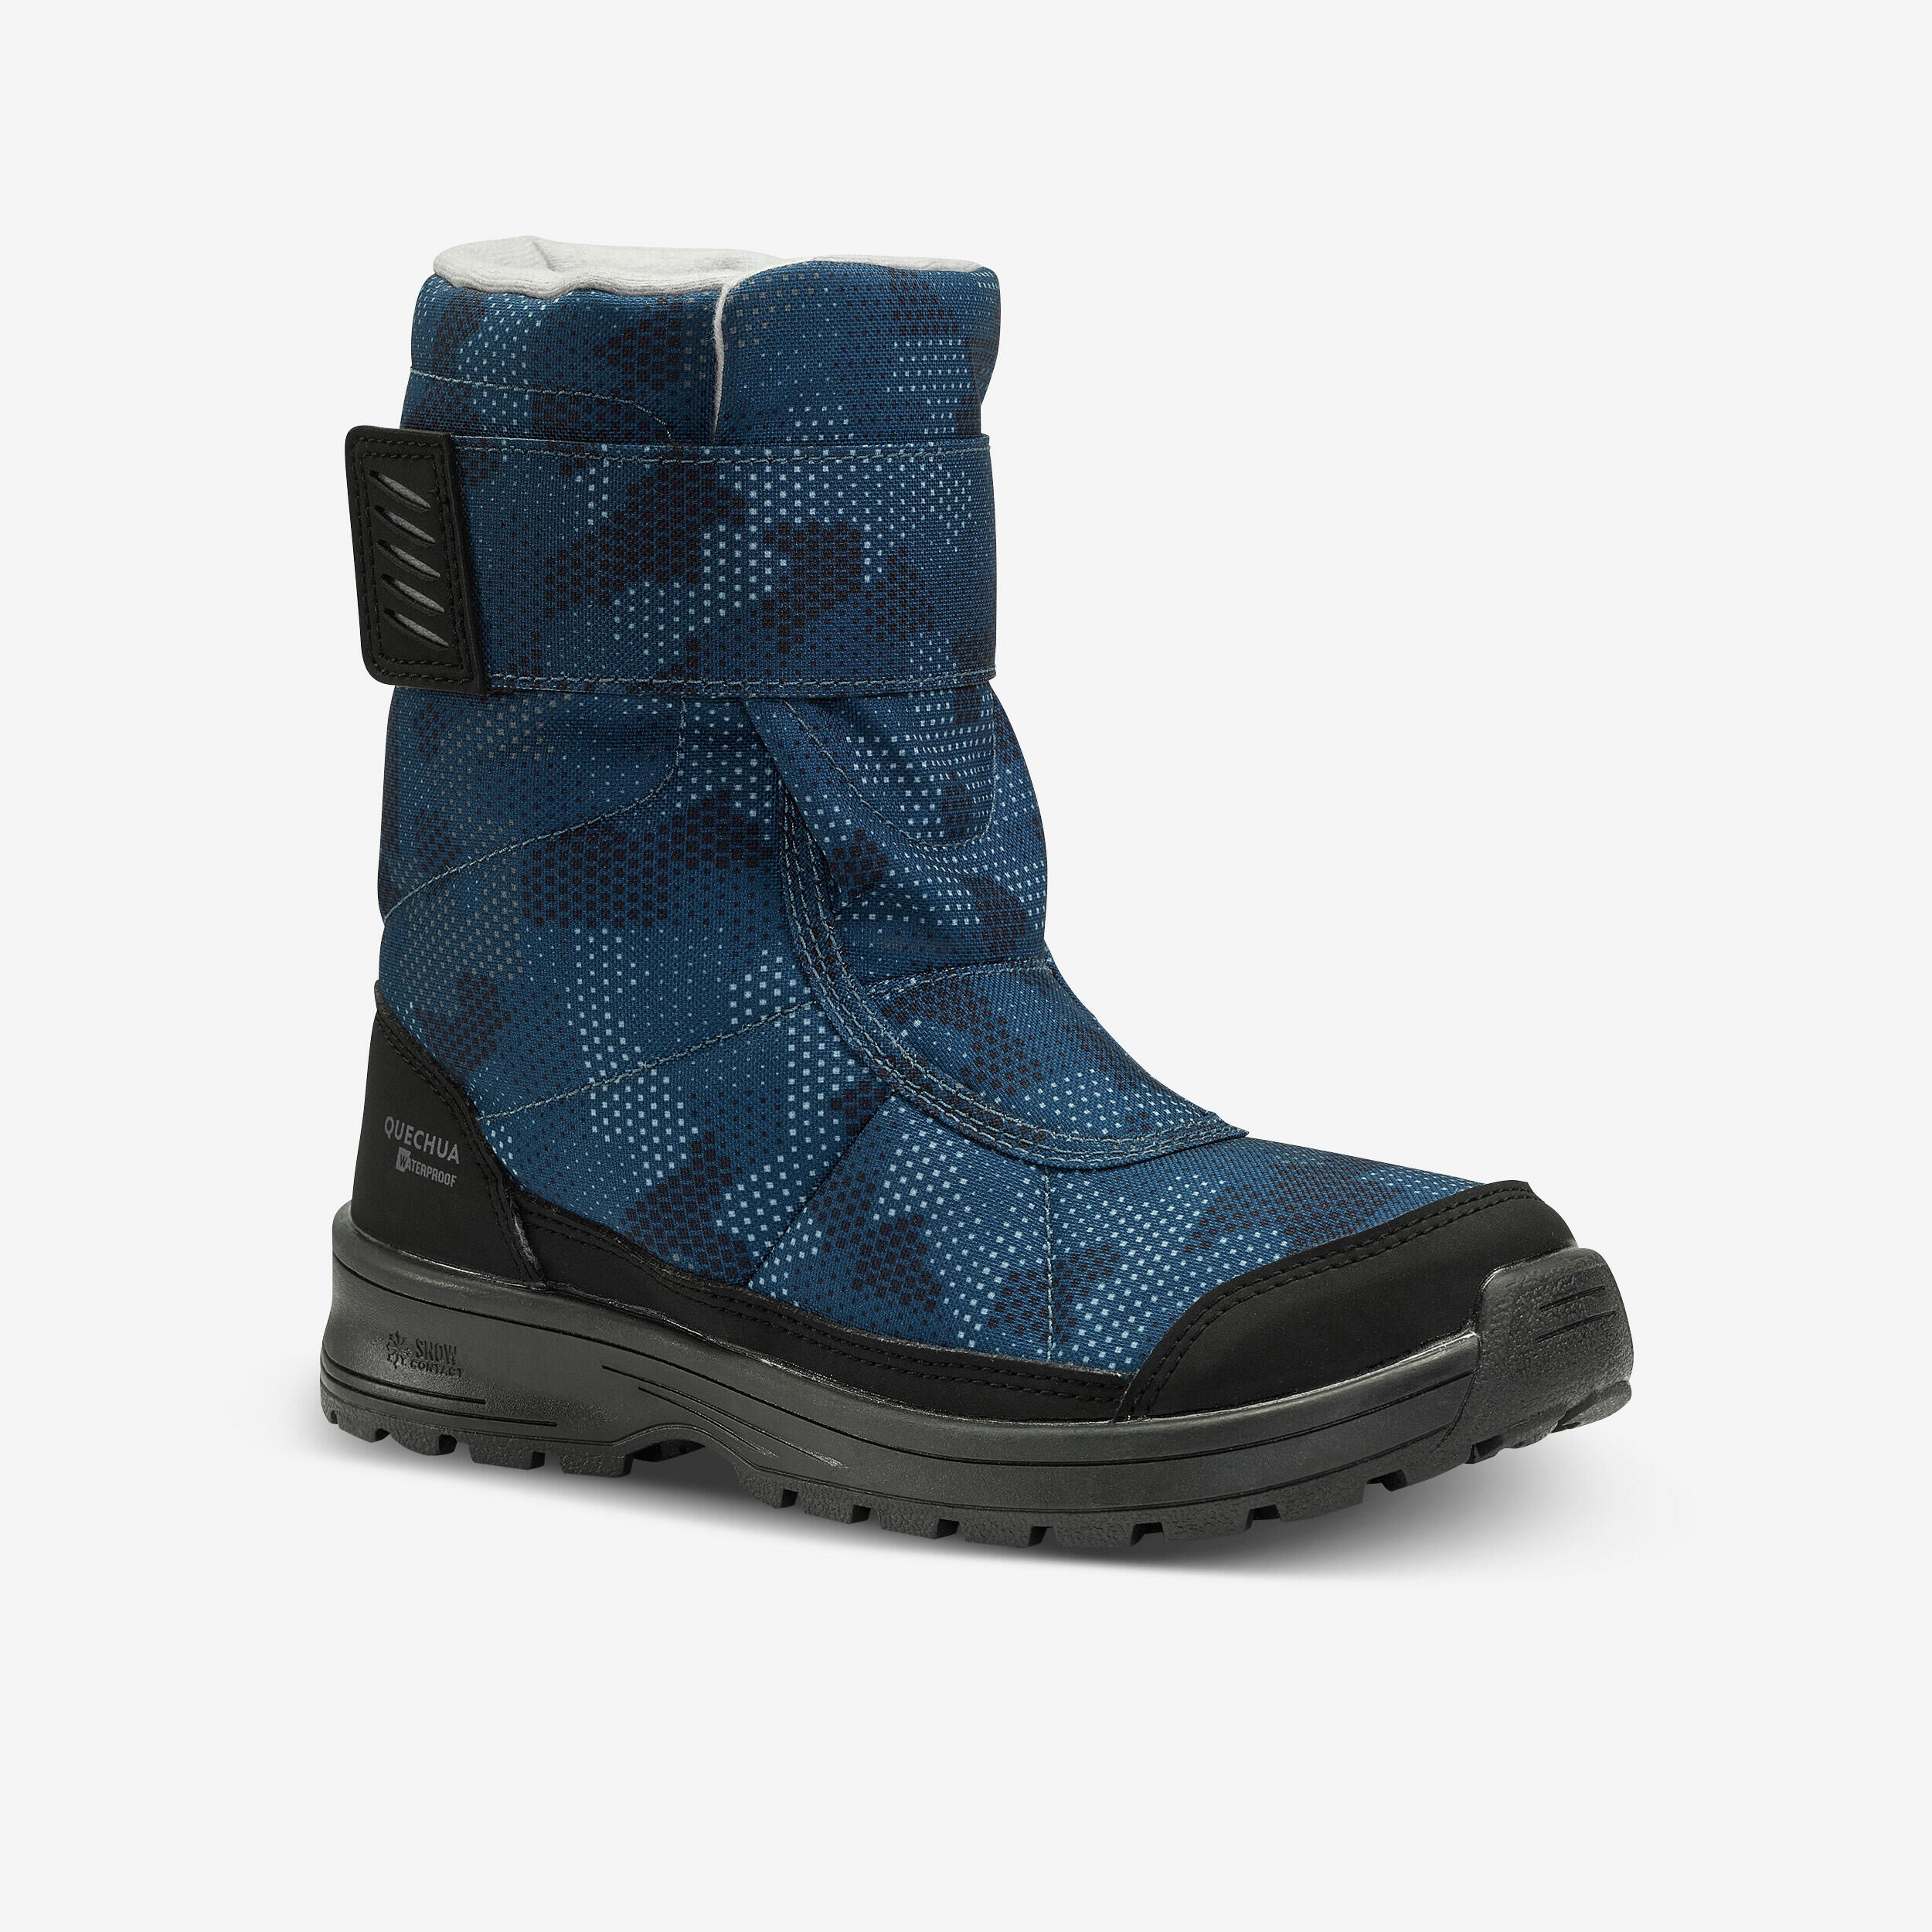 QUECHUA Kids’ Warm Waterproof Snow Hiking Boots SH100 X-Warm Size 7 - 5.5